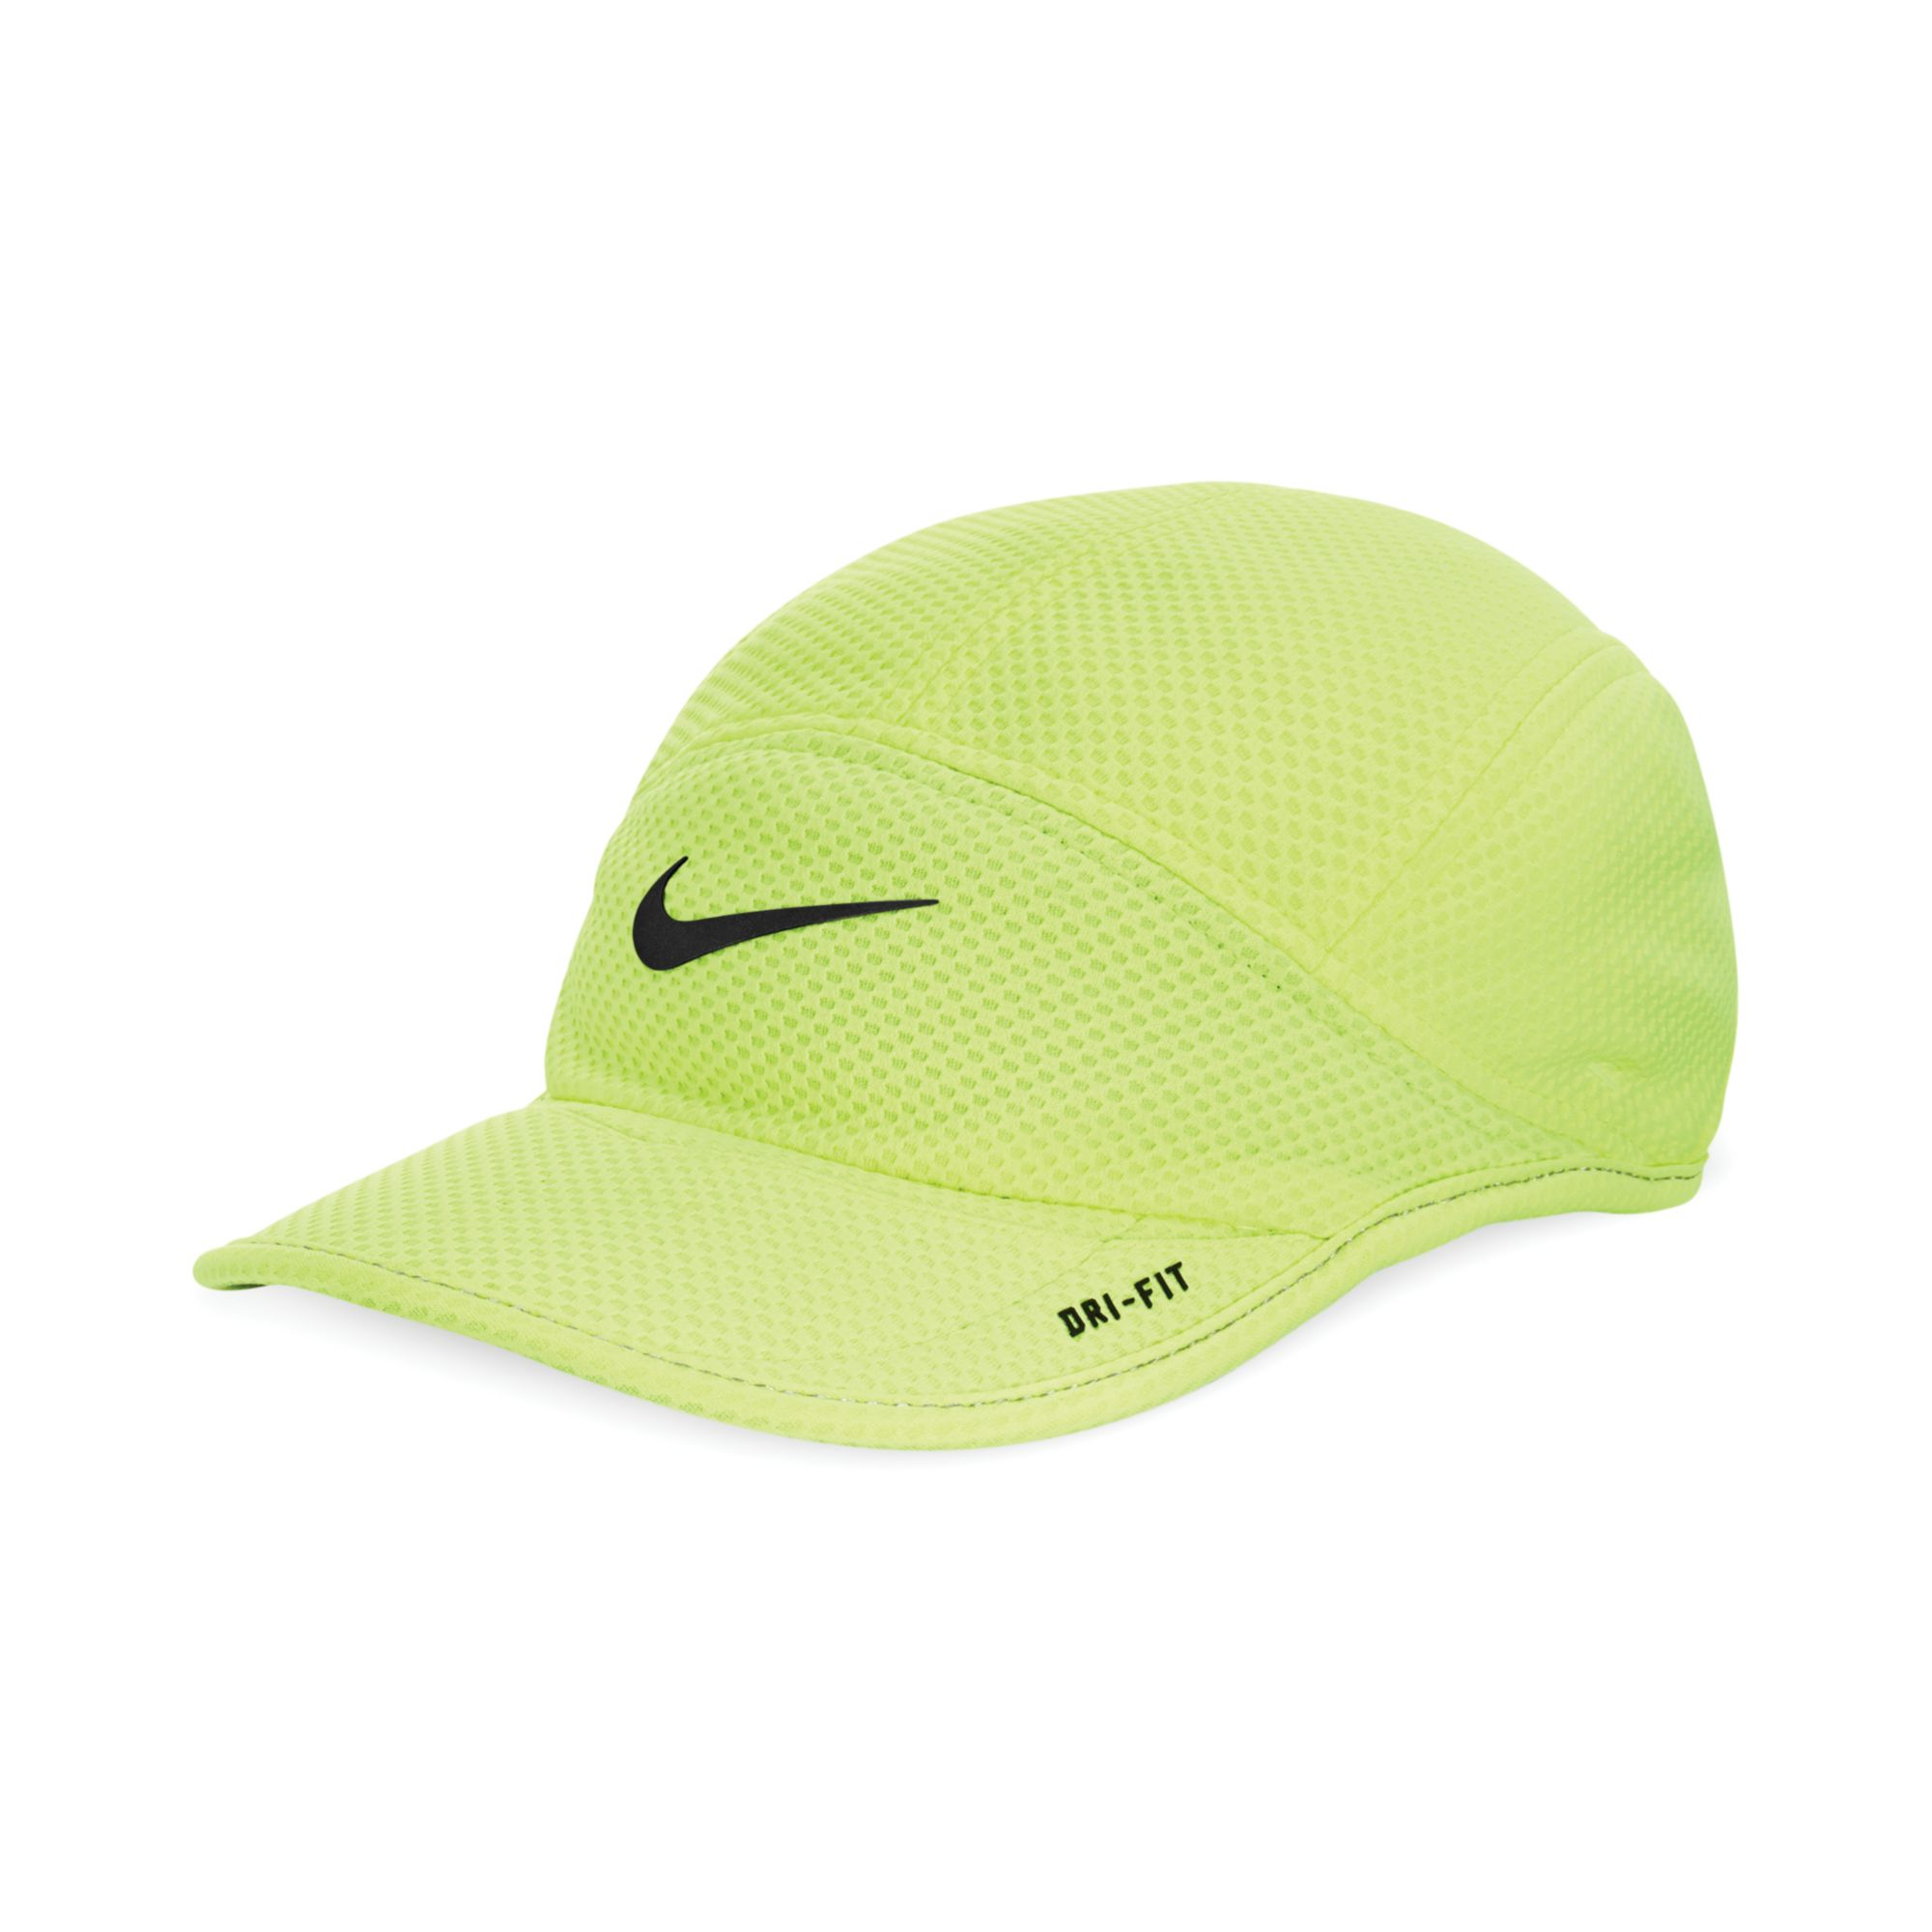 Nike Men's Yellow Daybreak Mesh Cap